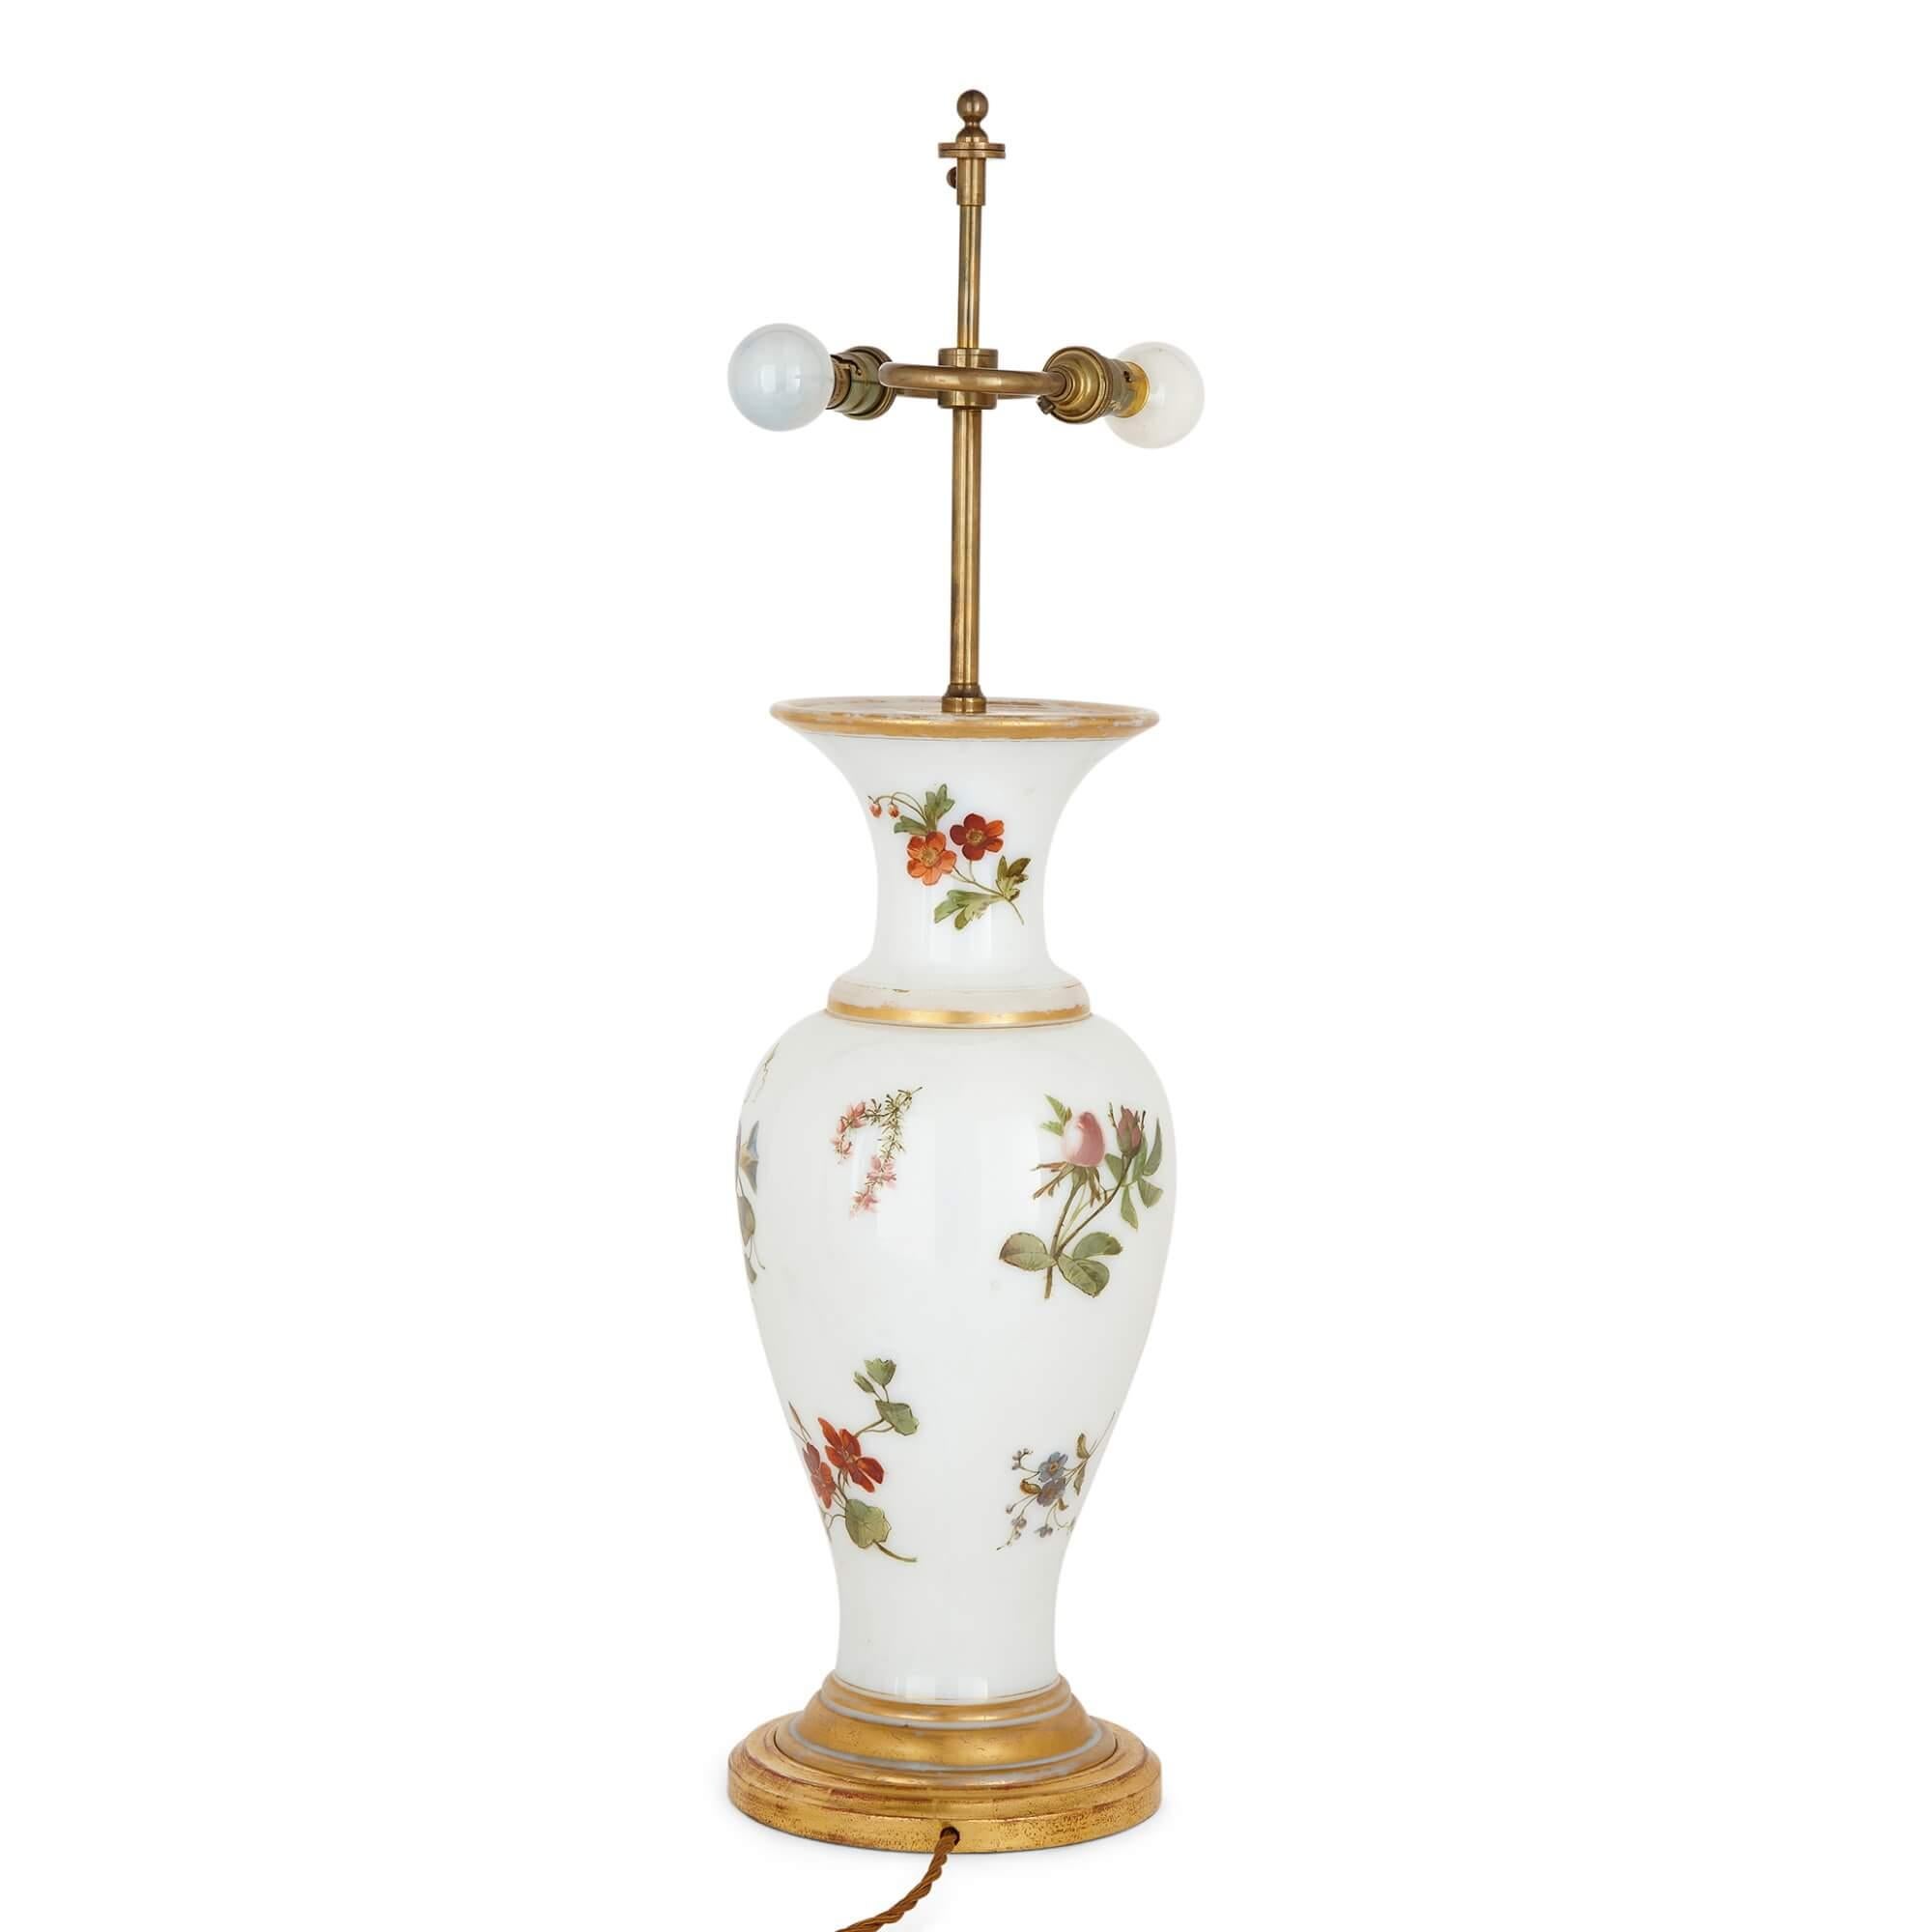 Rococo Lampe en verre opalin de Baccarat, vase formé d'une décoration florale en vente